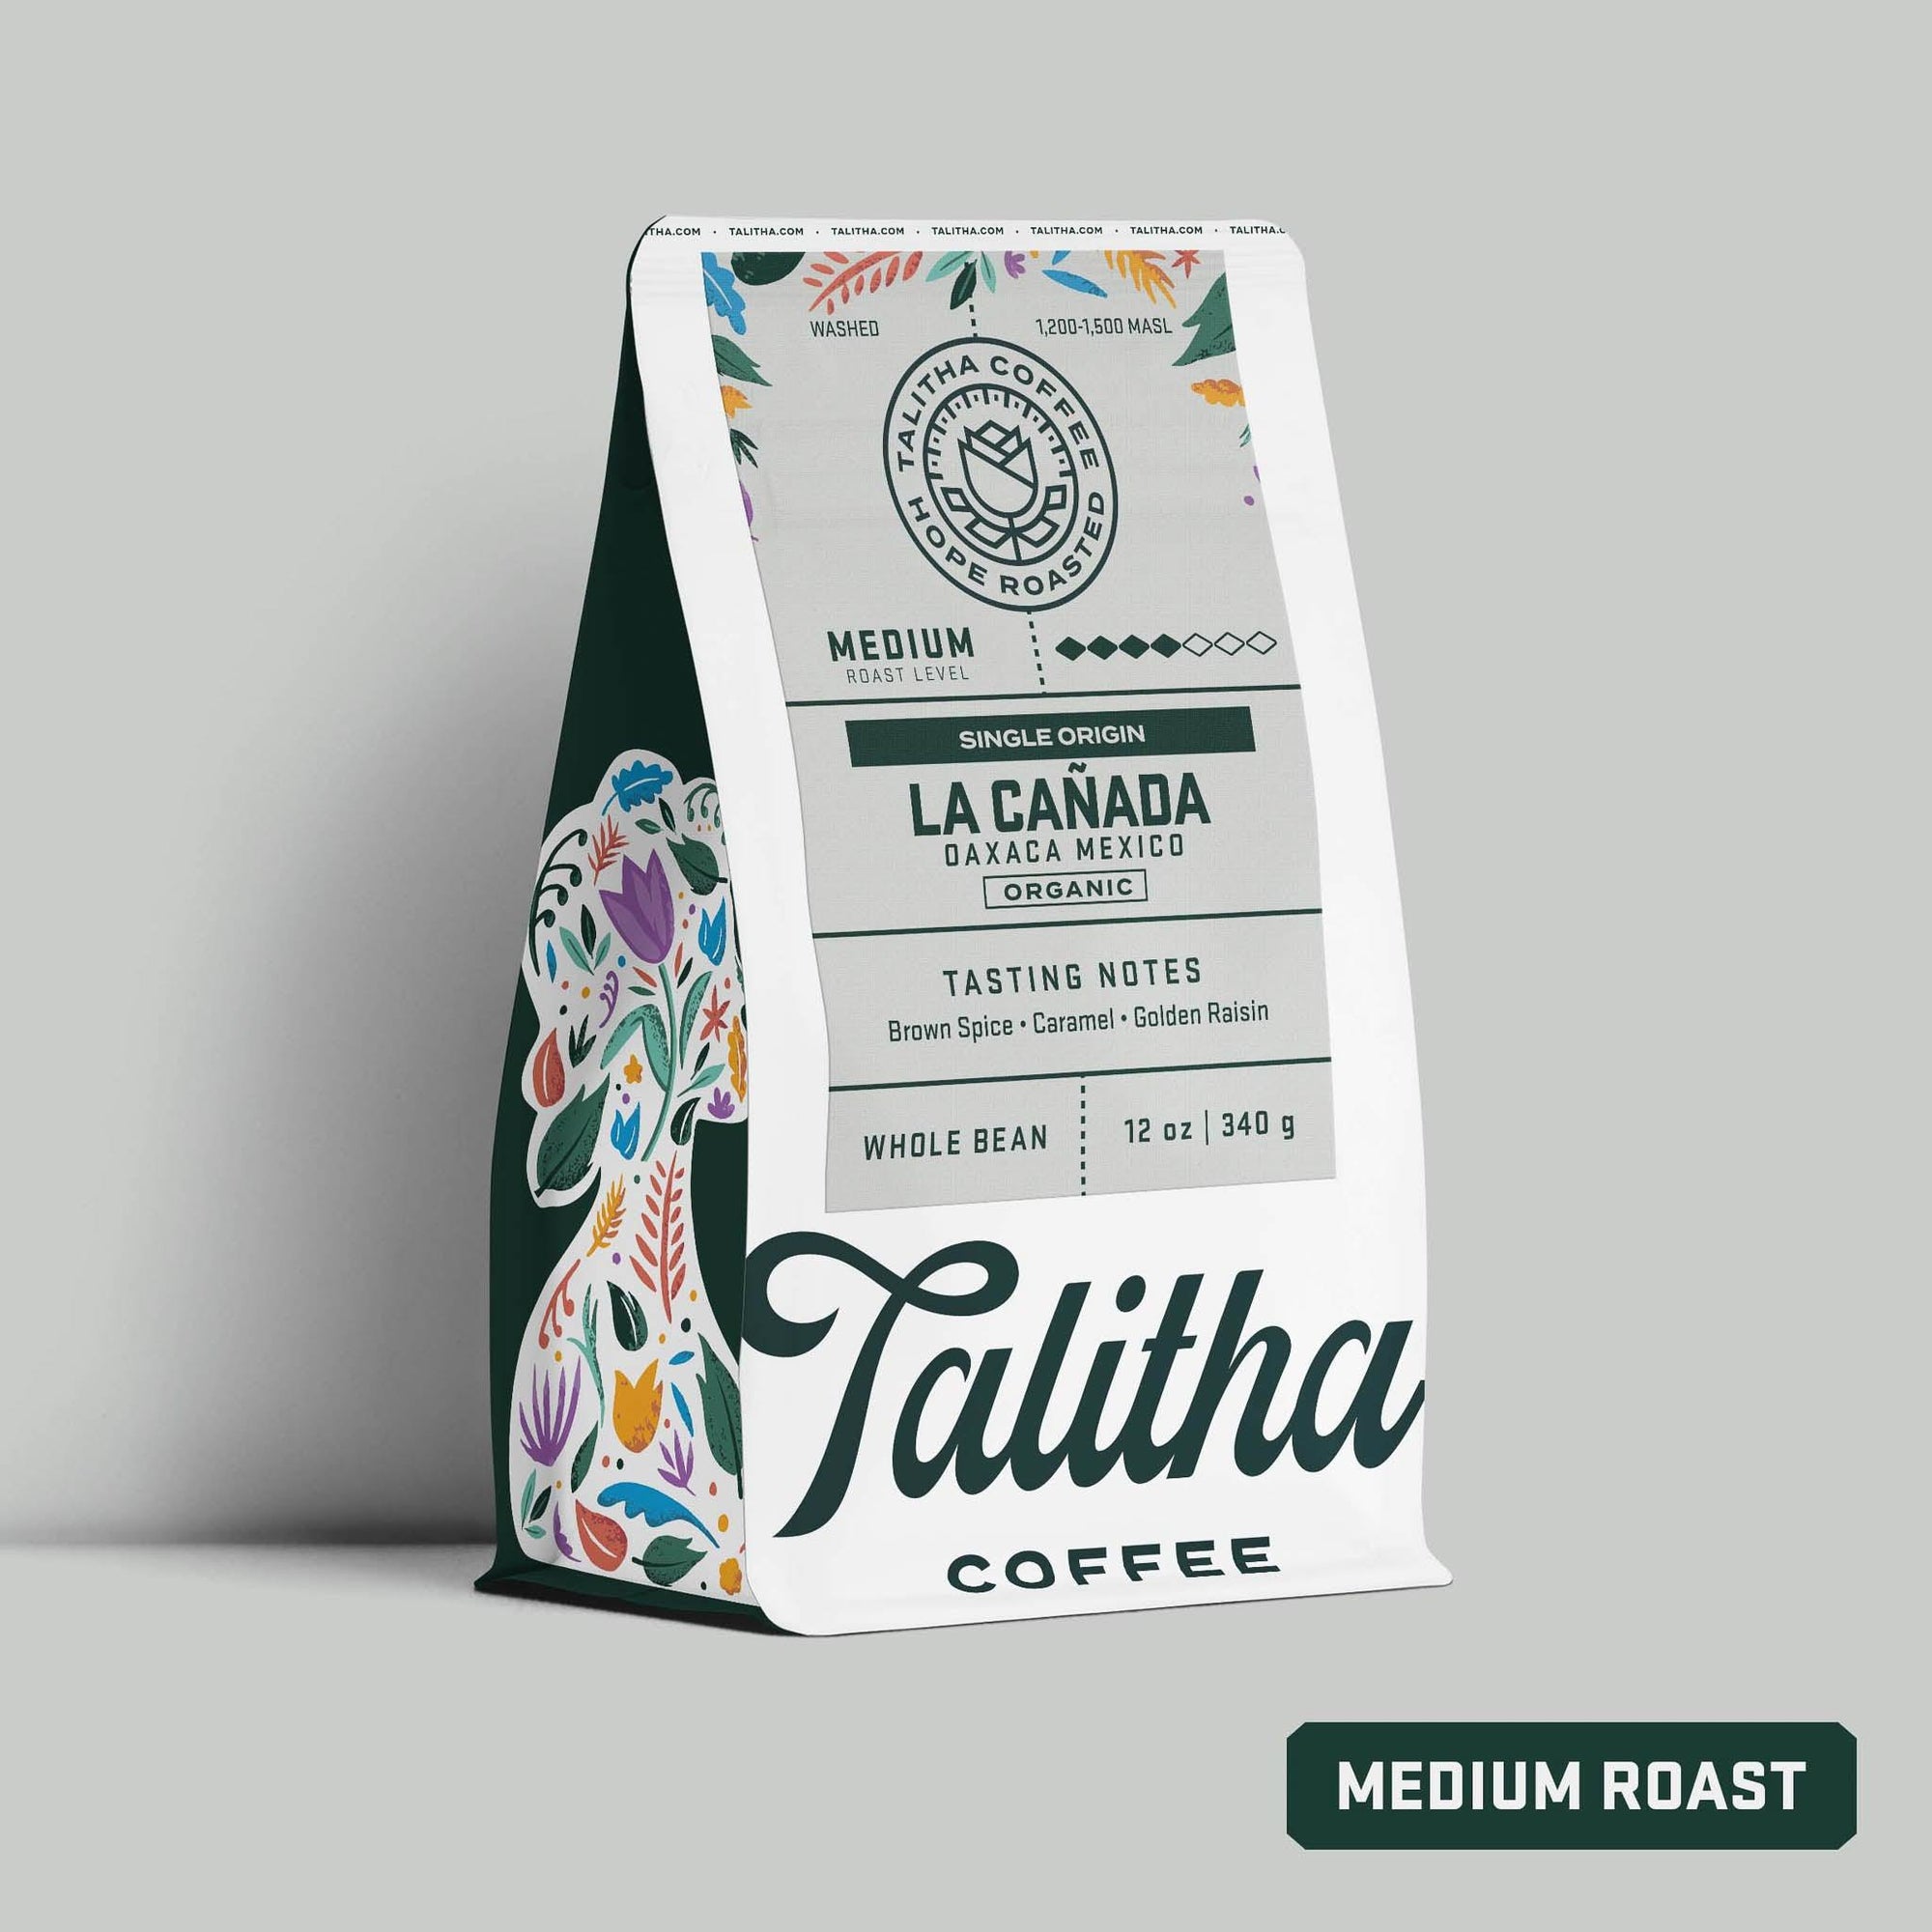 La Cañada - Mexico - Talitha Coffee